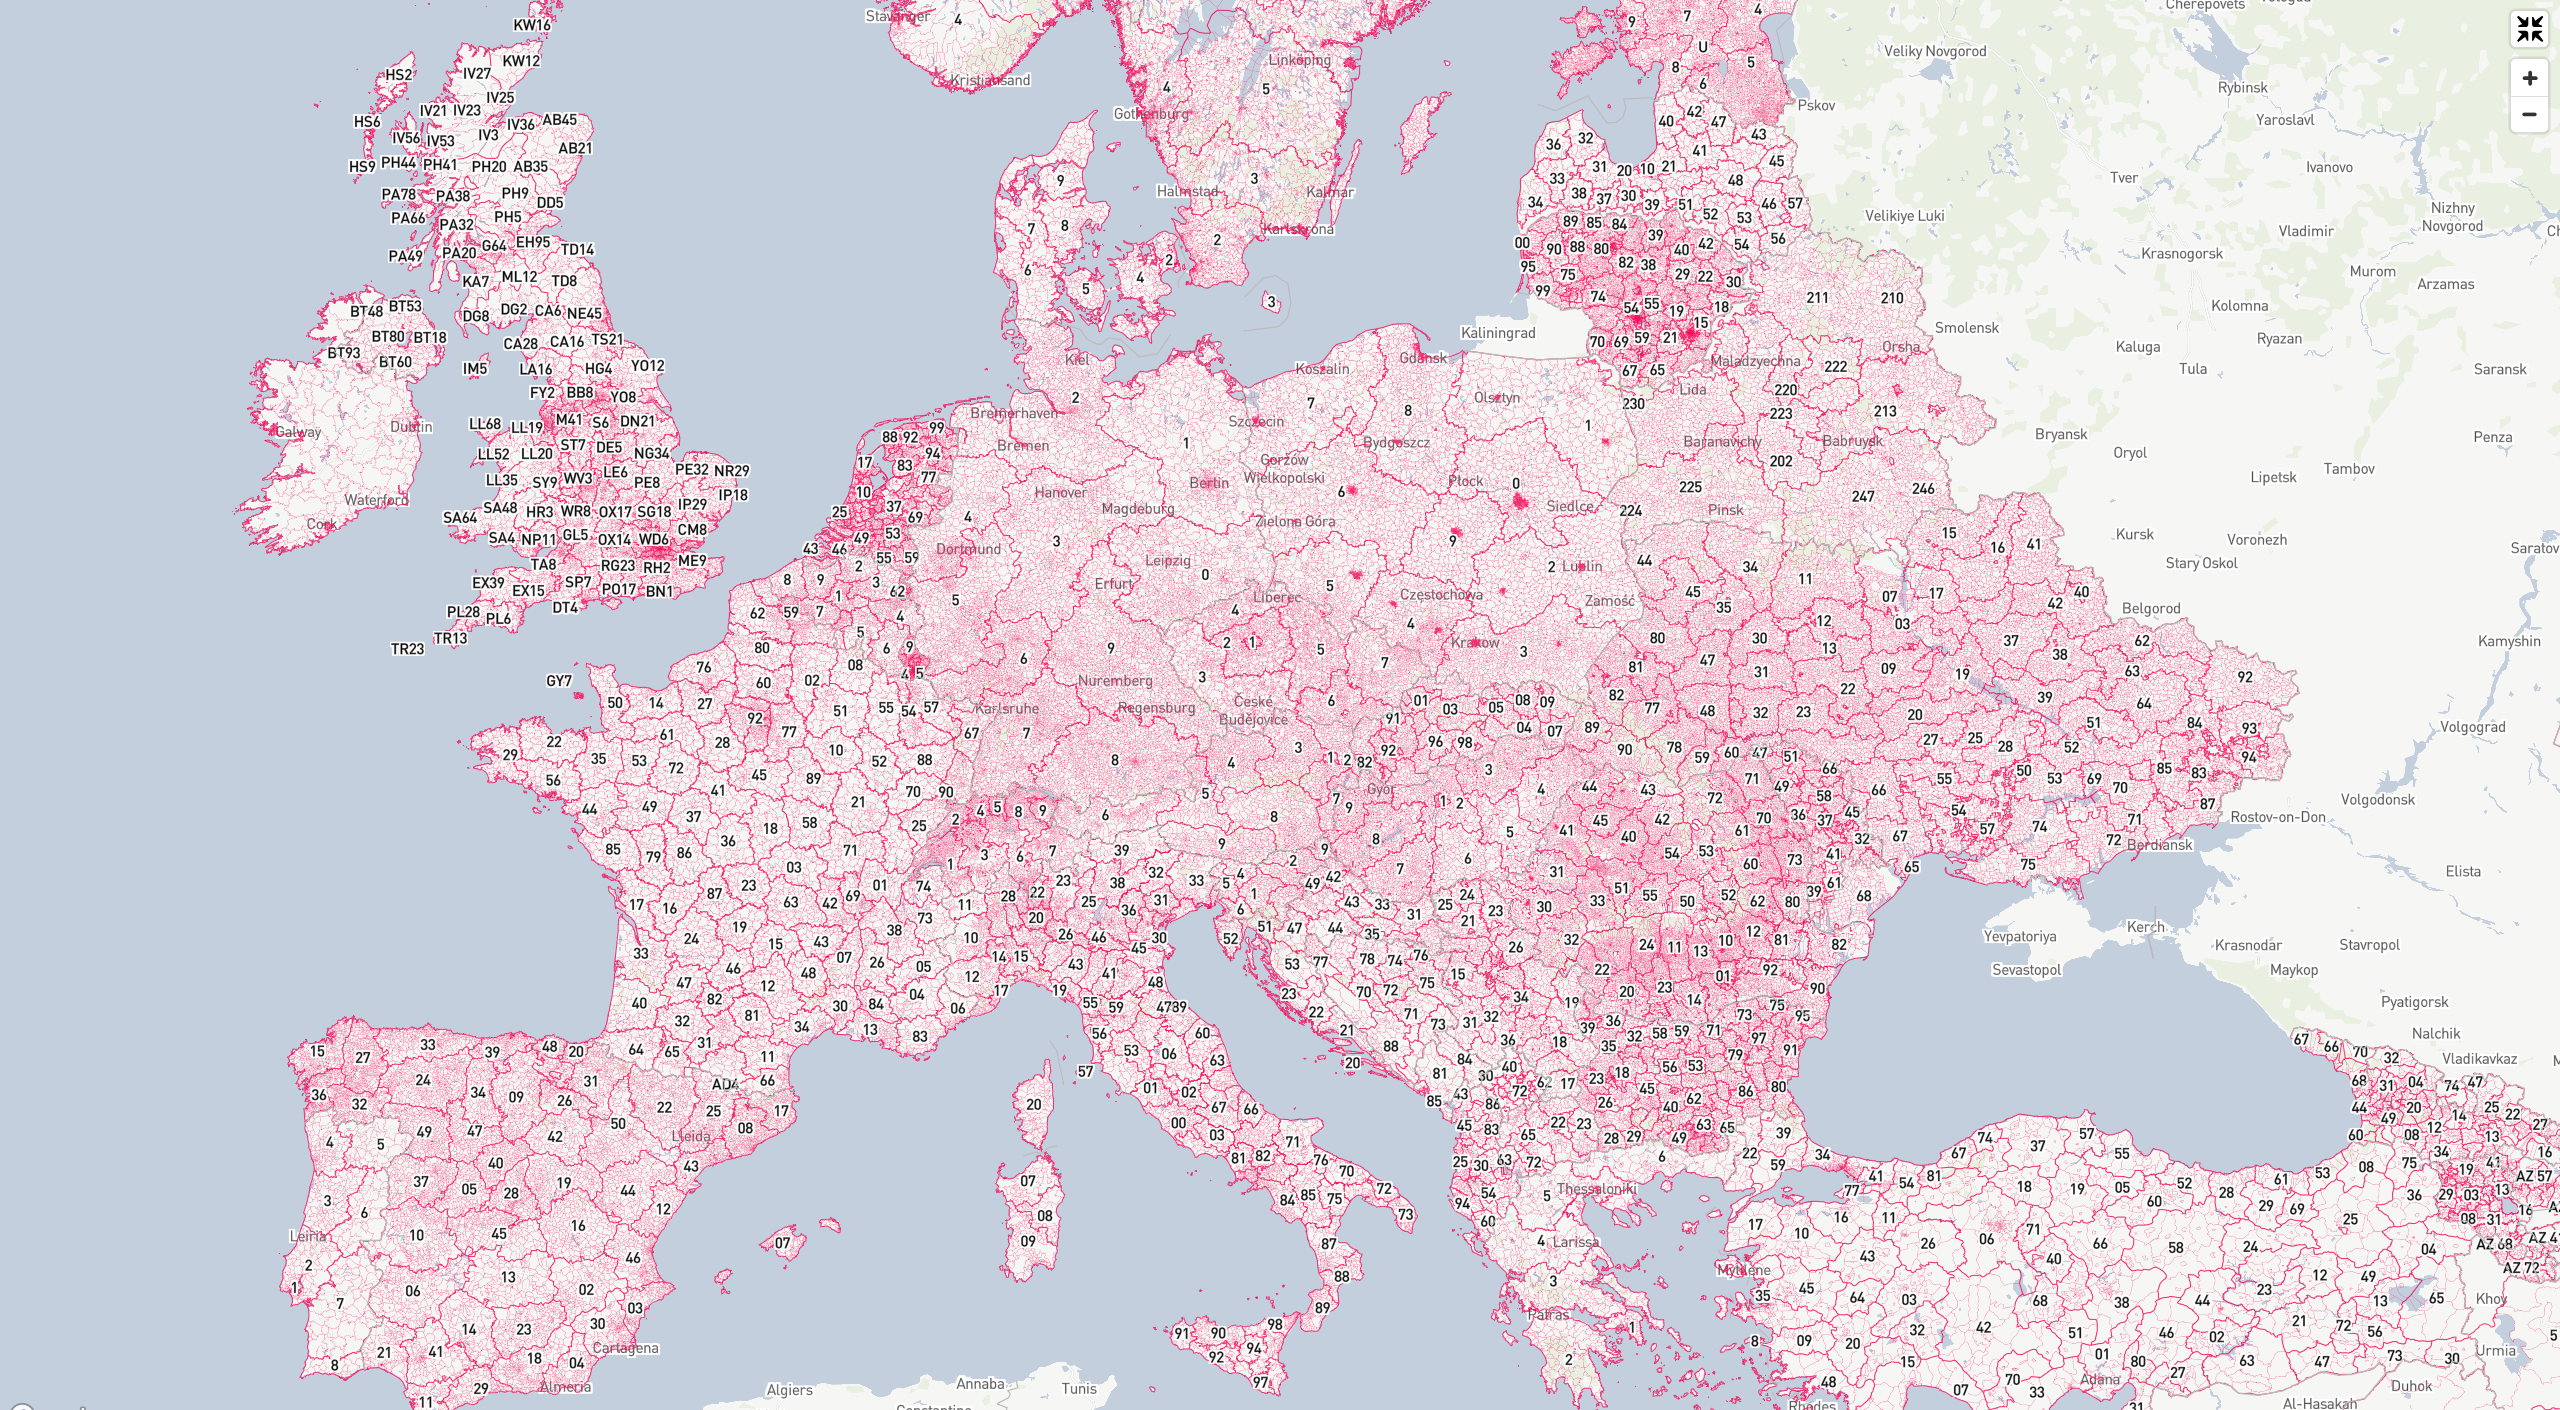 GeoPostcodes location database